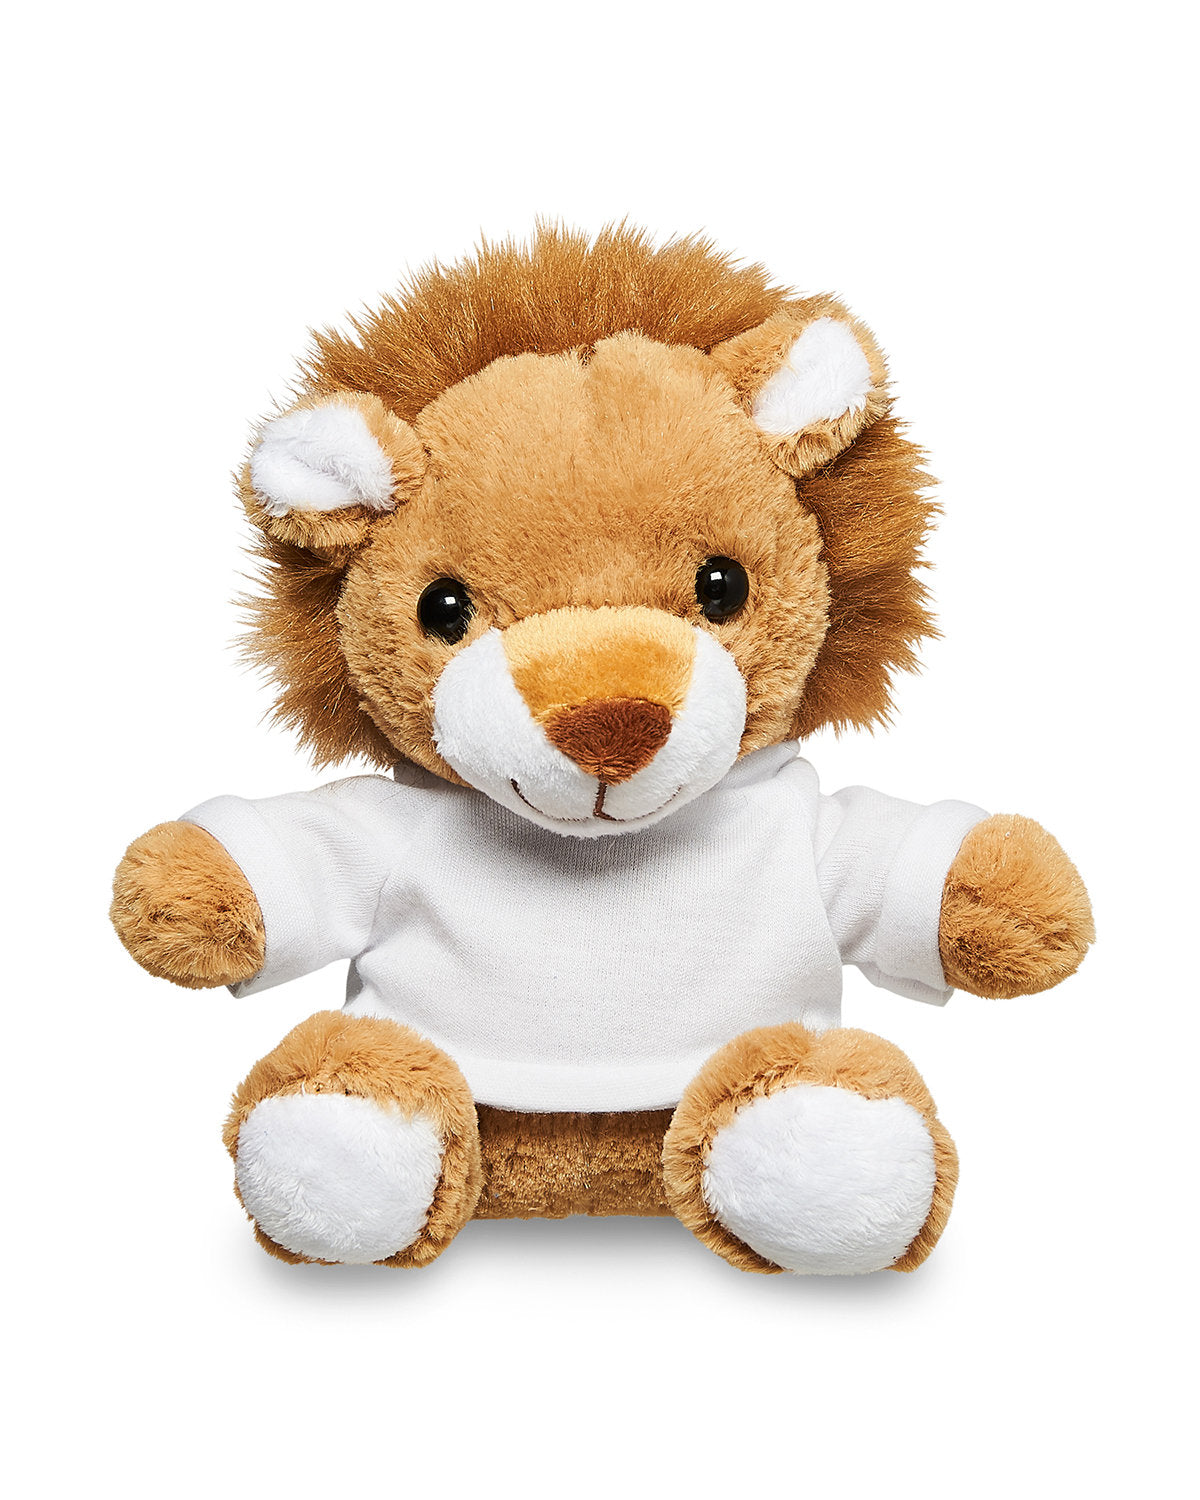 7" Plush Lion With T-Shirt